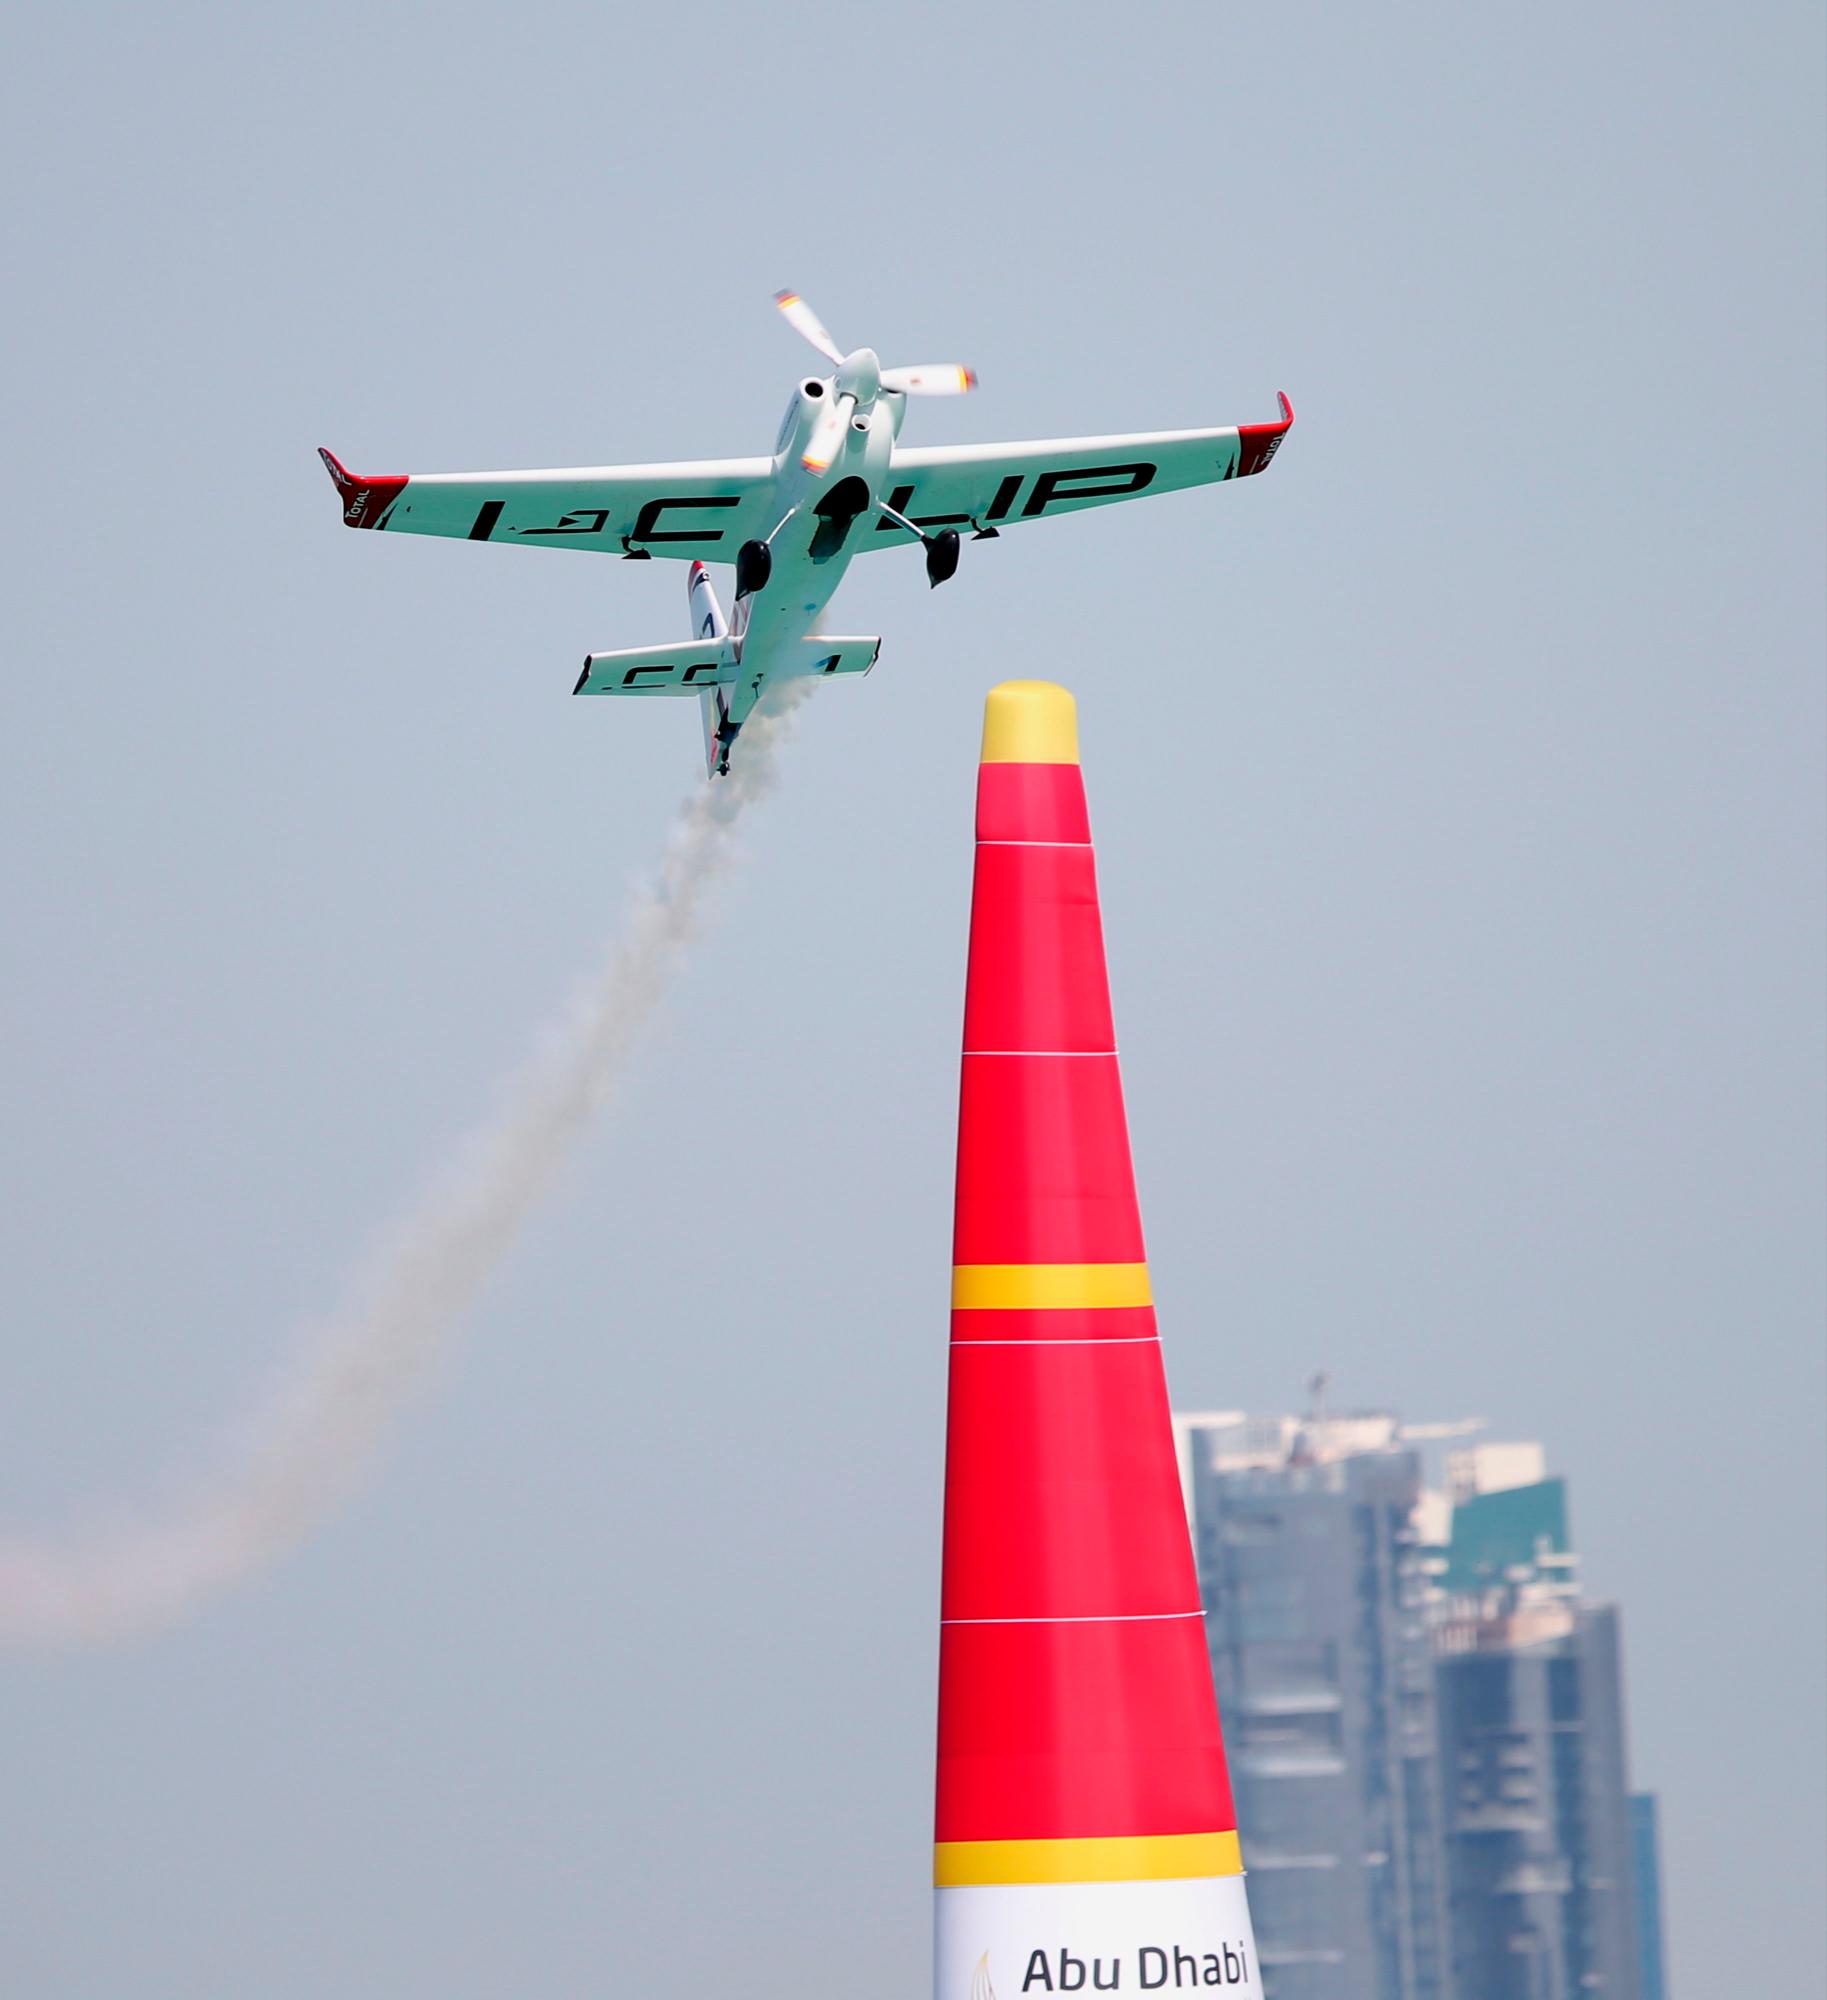 Abu Dhabi (Emiratos Árabes Unidos), 09/02 / 2019.- Matthias Dolderer de Alemania se presenta durante el Campeonato Mundial Red Bull Air Race en Abu Dhabi, Emiratos Árabes Unidos, 09 de febrero de 2019. (Alemania, Emiratos Árabes Unidos)